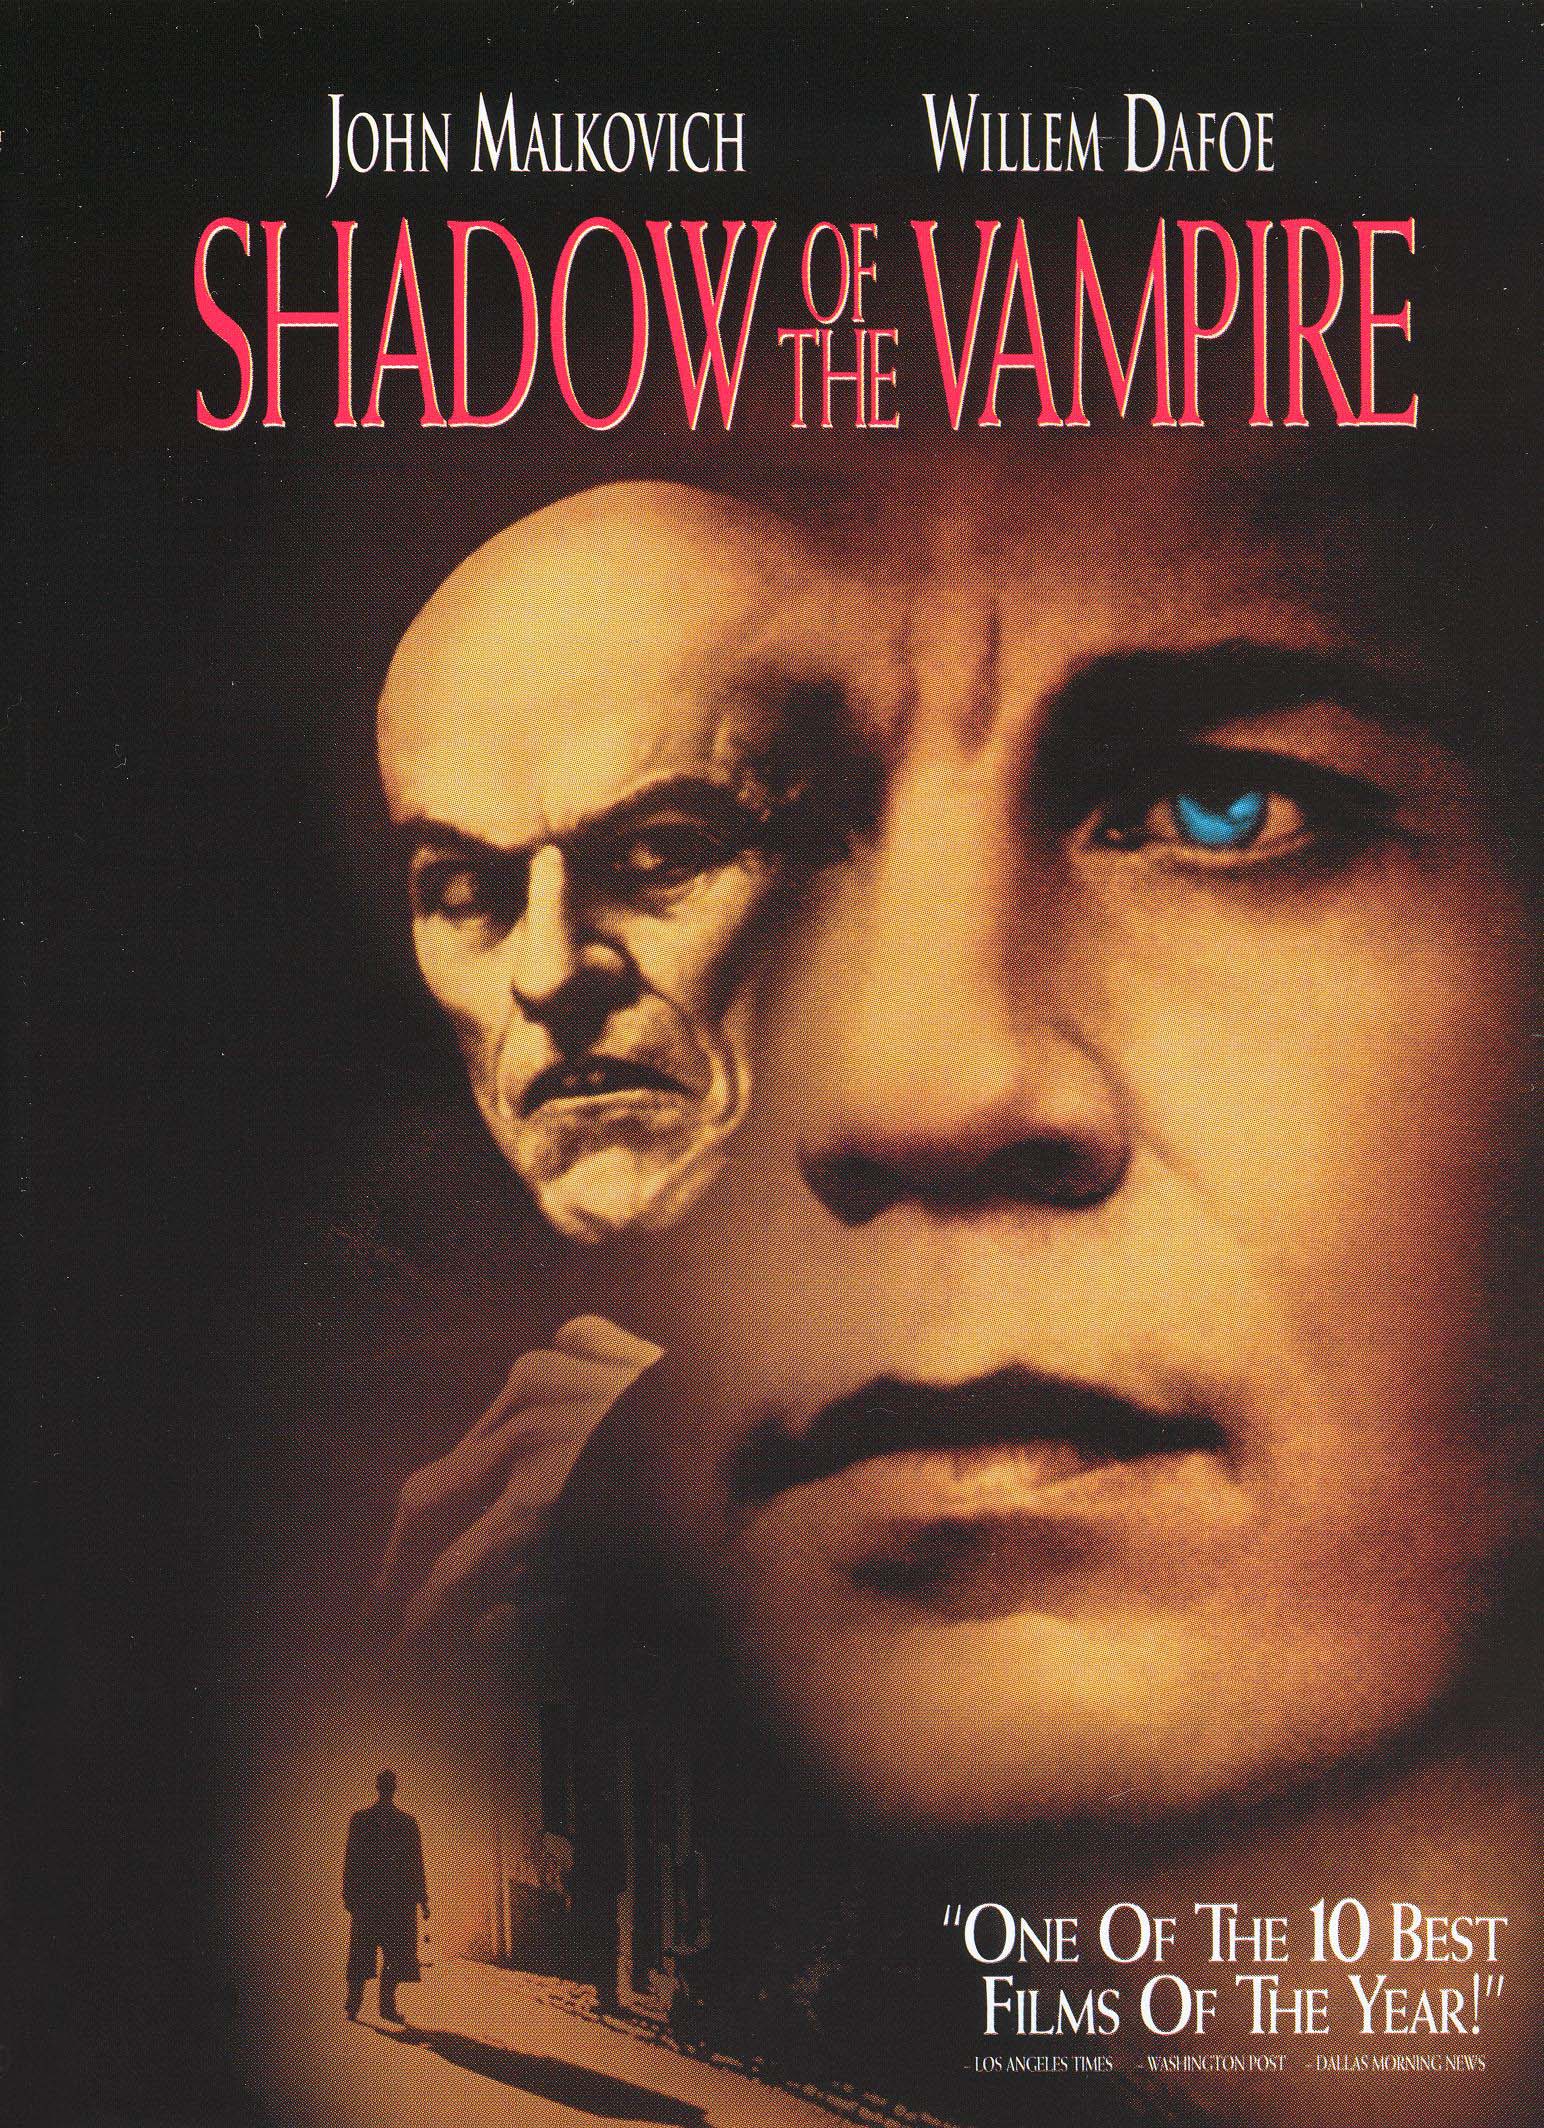 FULL MOVIE: Shadow of the Vampire (2000) [Horror]